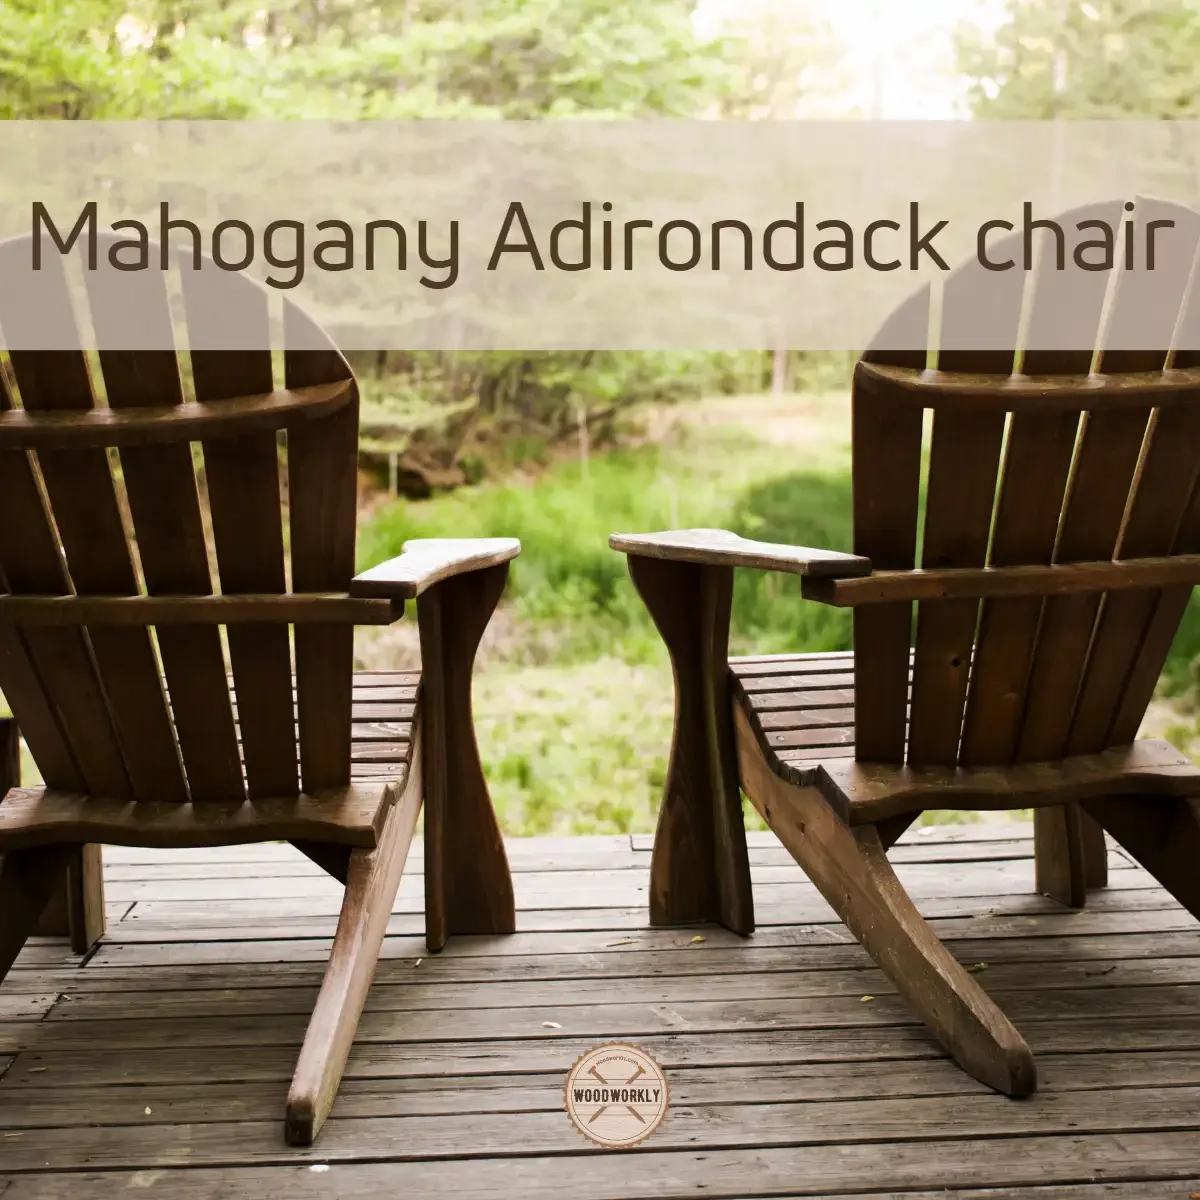 Mahogany Adirondack chair